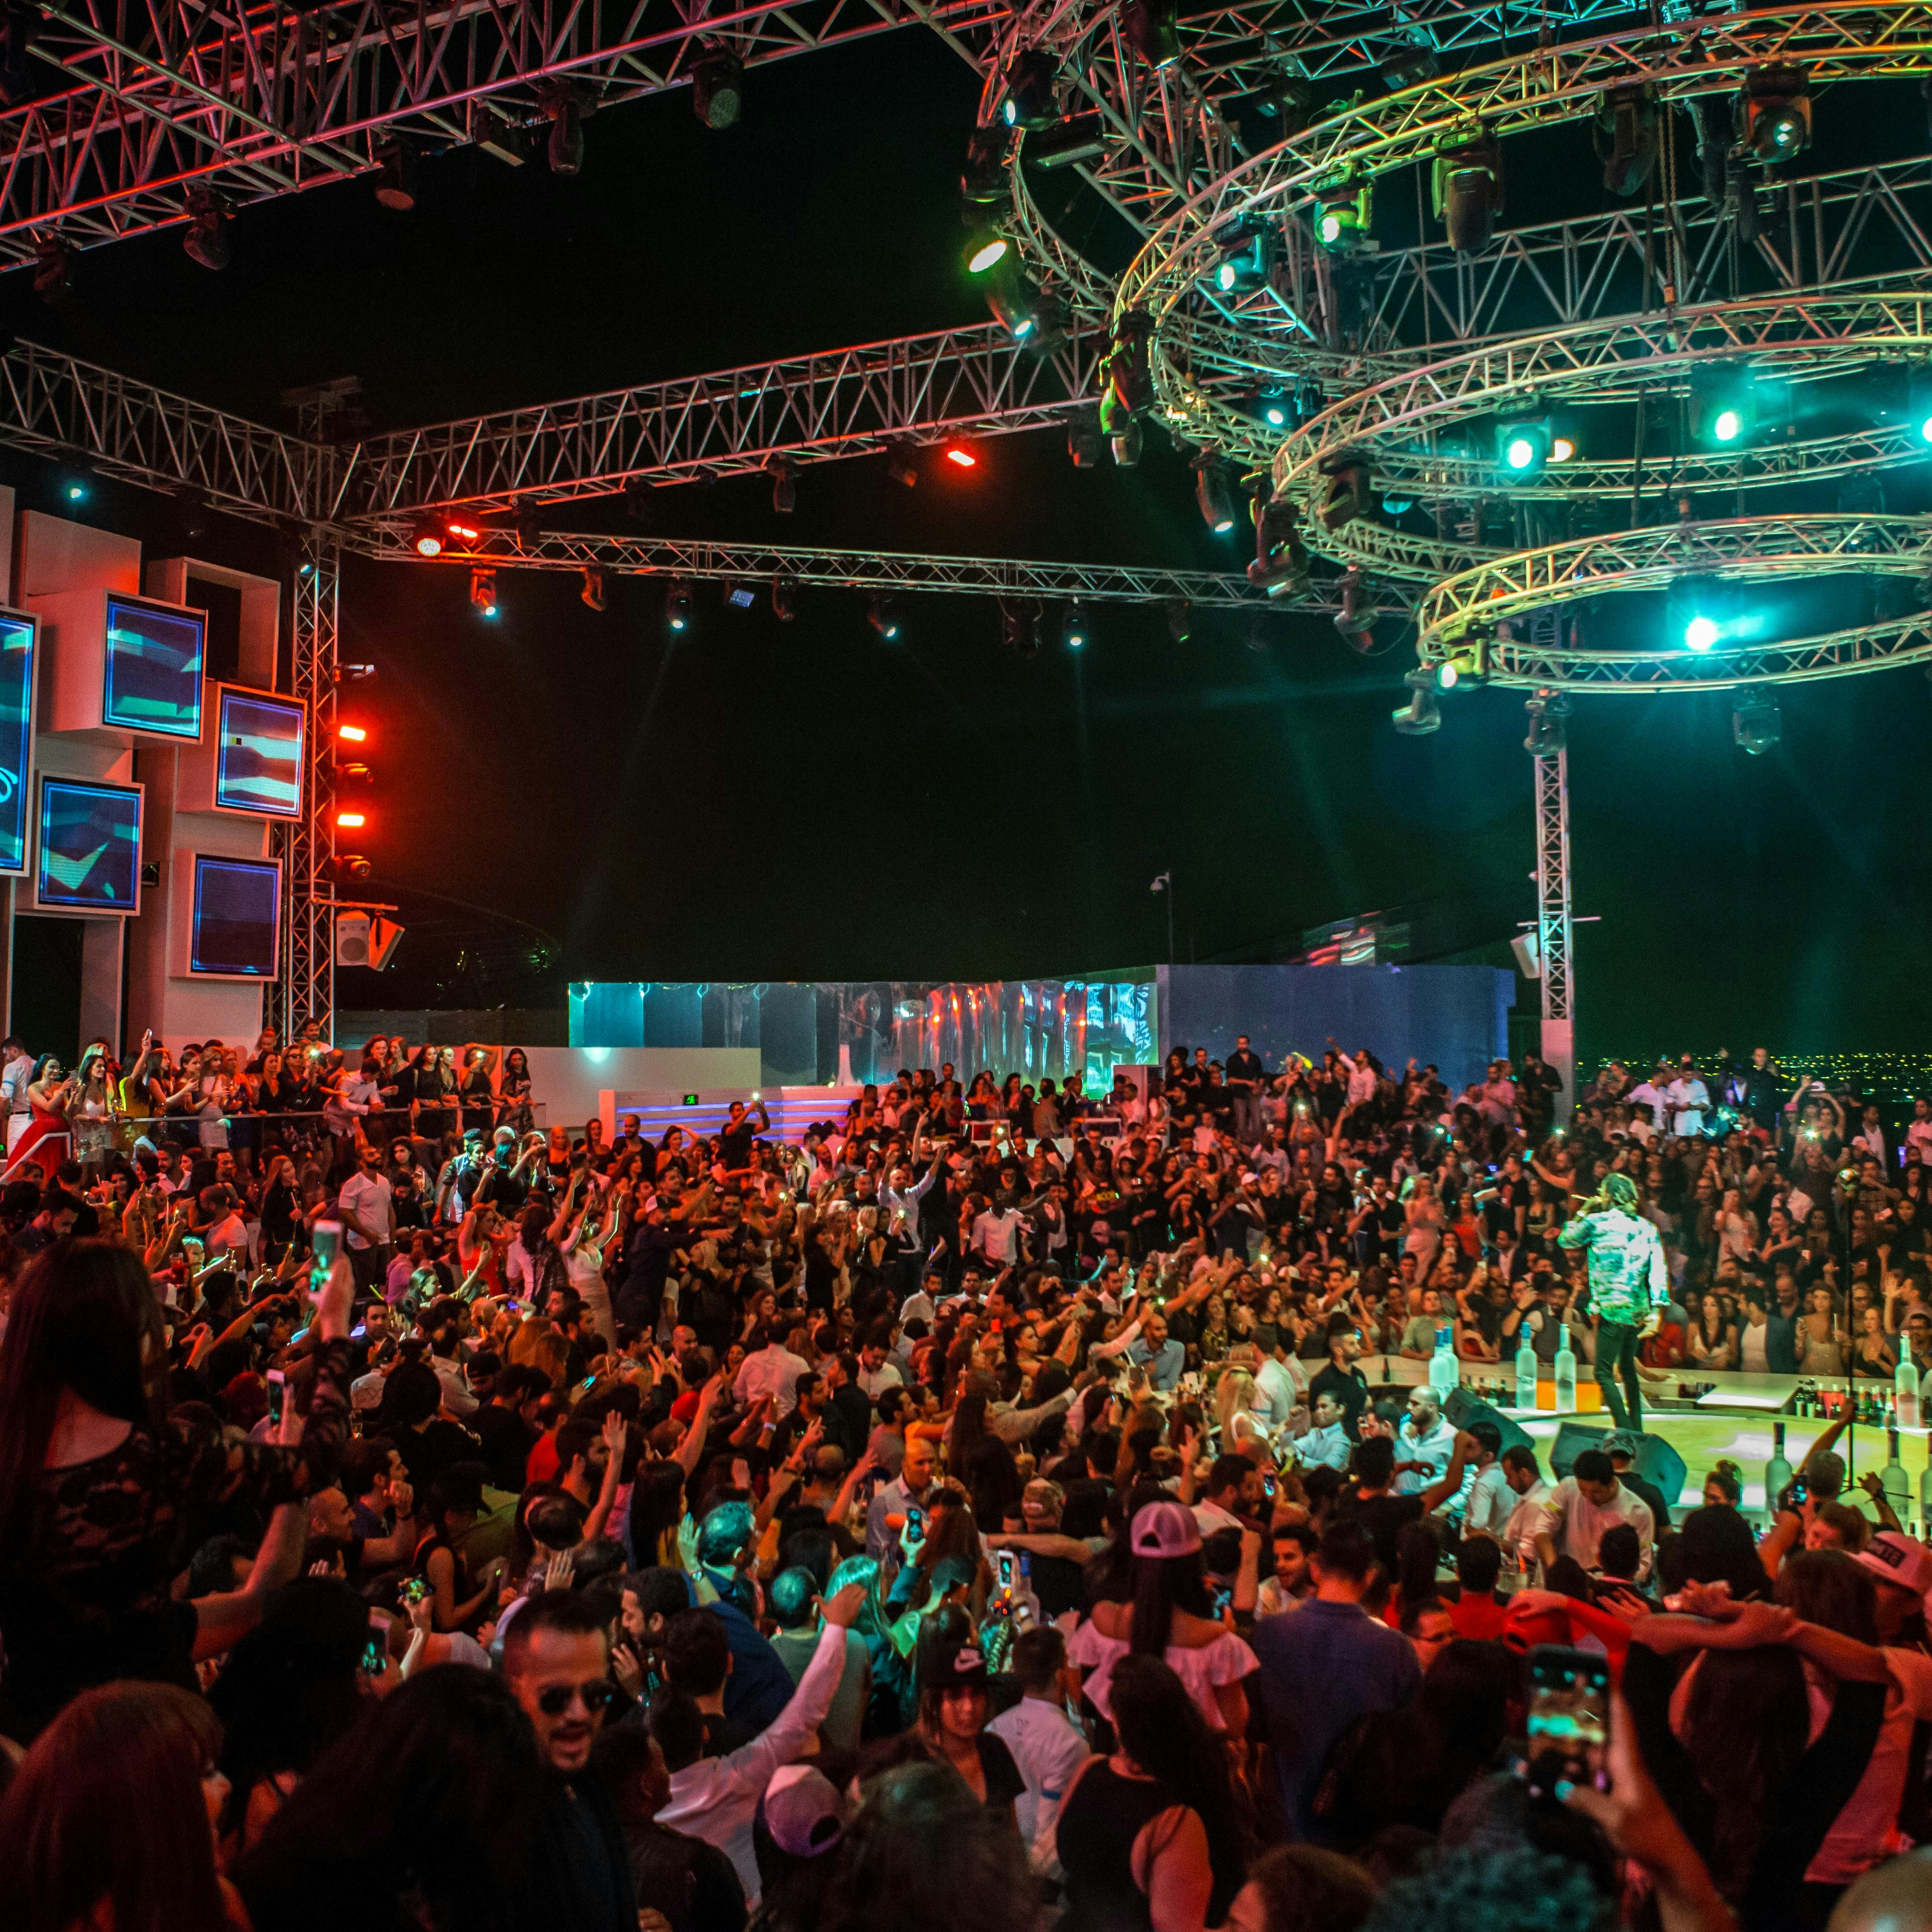 Wiz Khalifa Performs At White Club Dubai on March 31, 2016 in Dubai, United Arab Emirates.